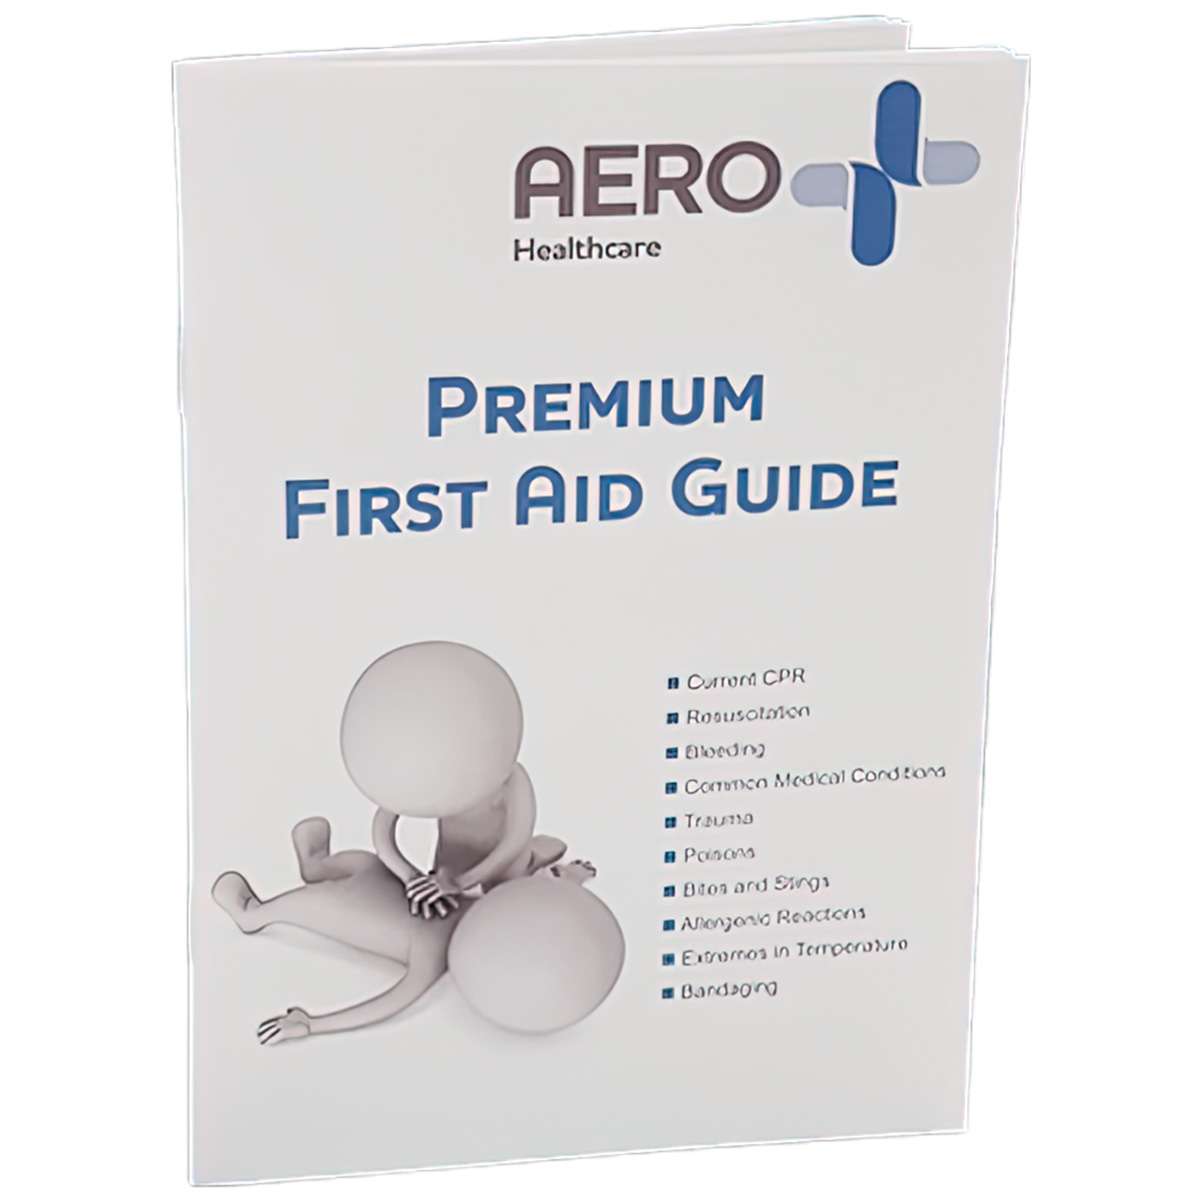 AEROGUIDE Premium First Aid Guide